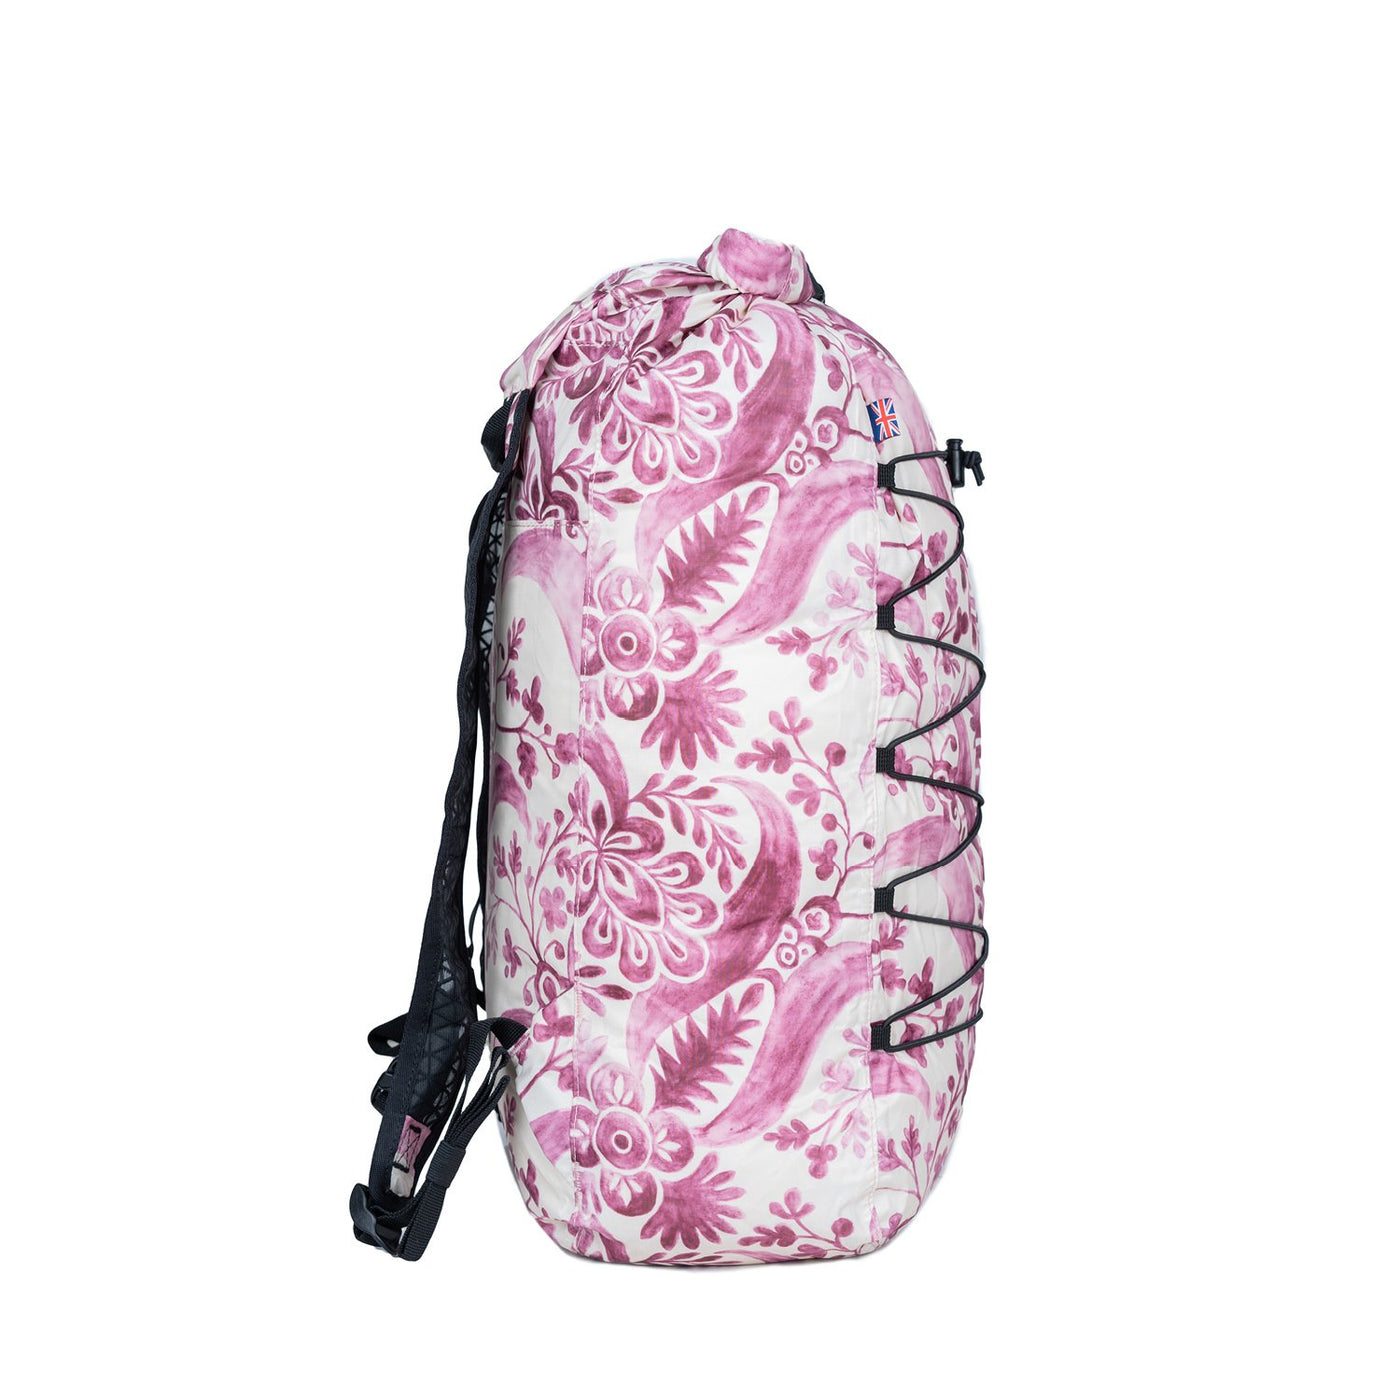 ADV Dry Waterproof Backpack - 30L Spitalfields